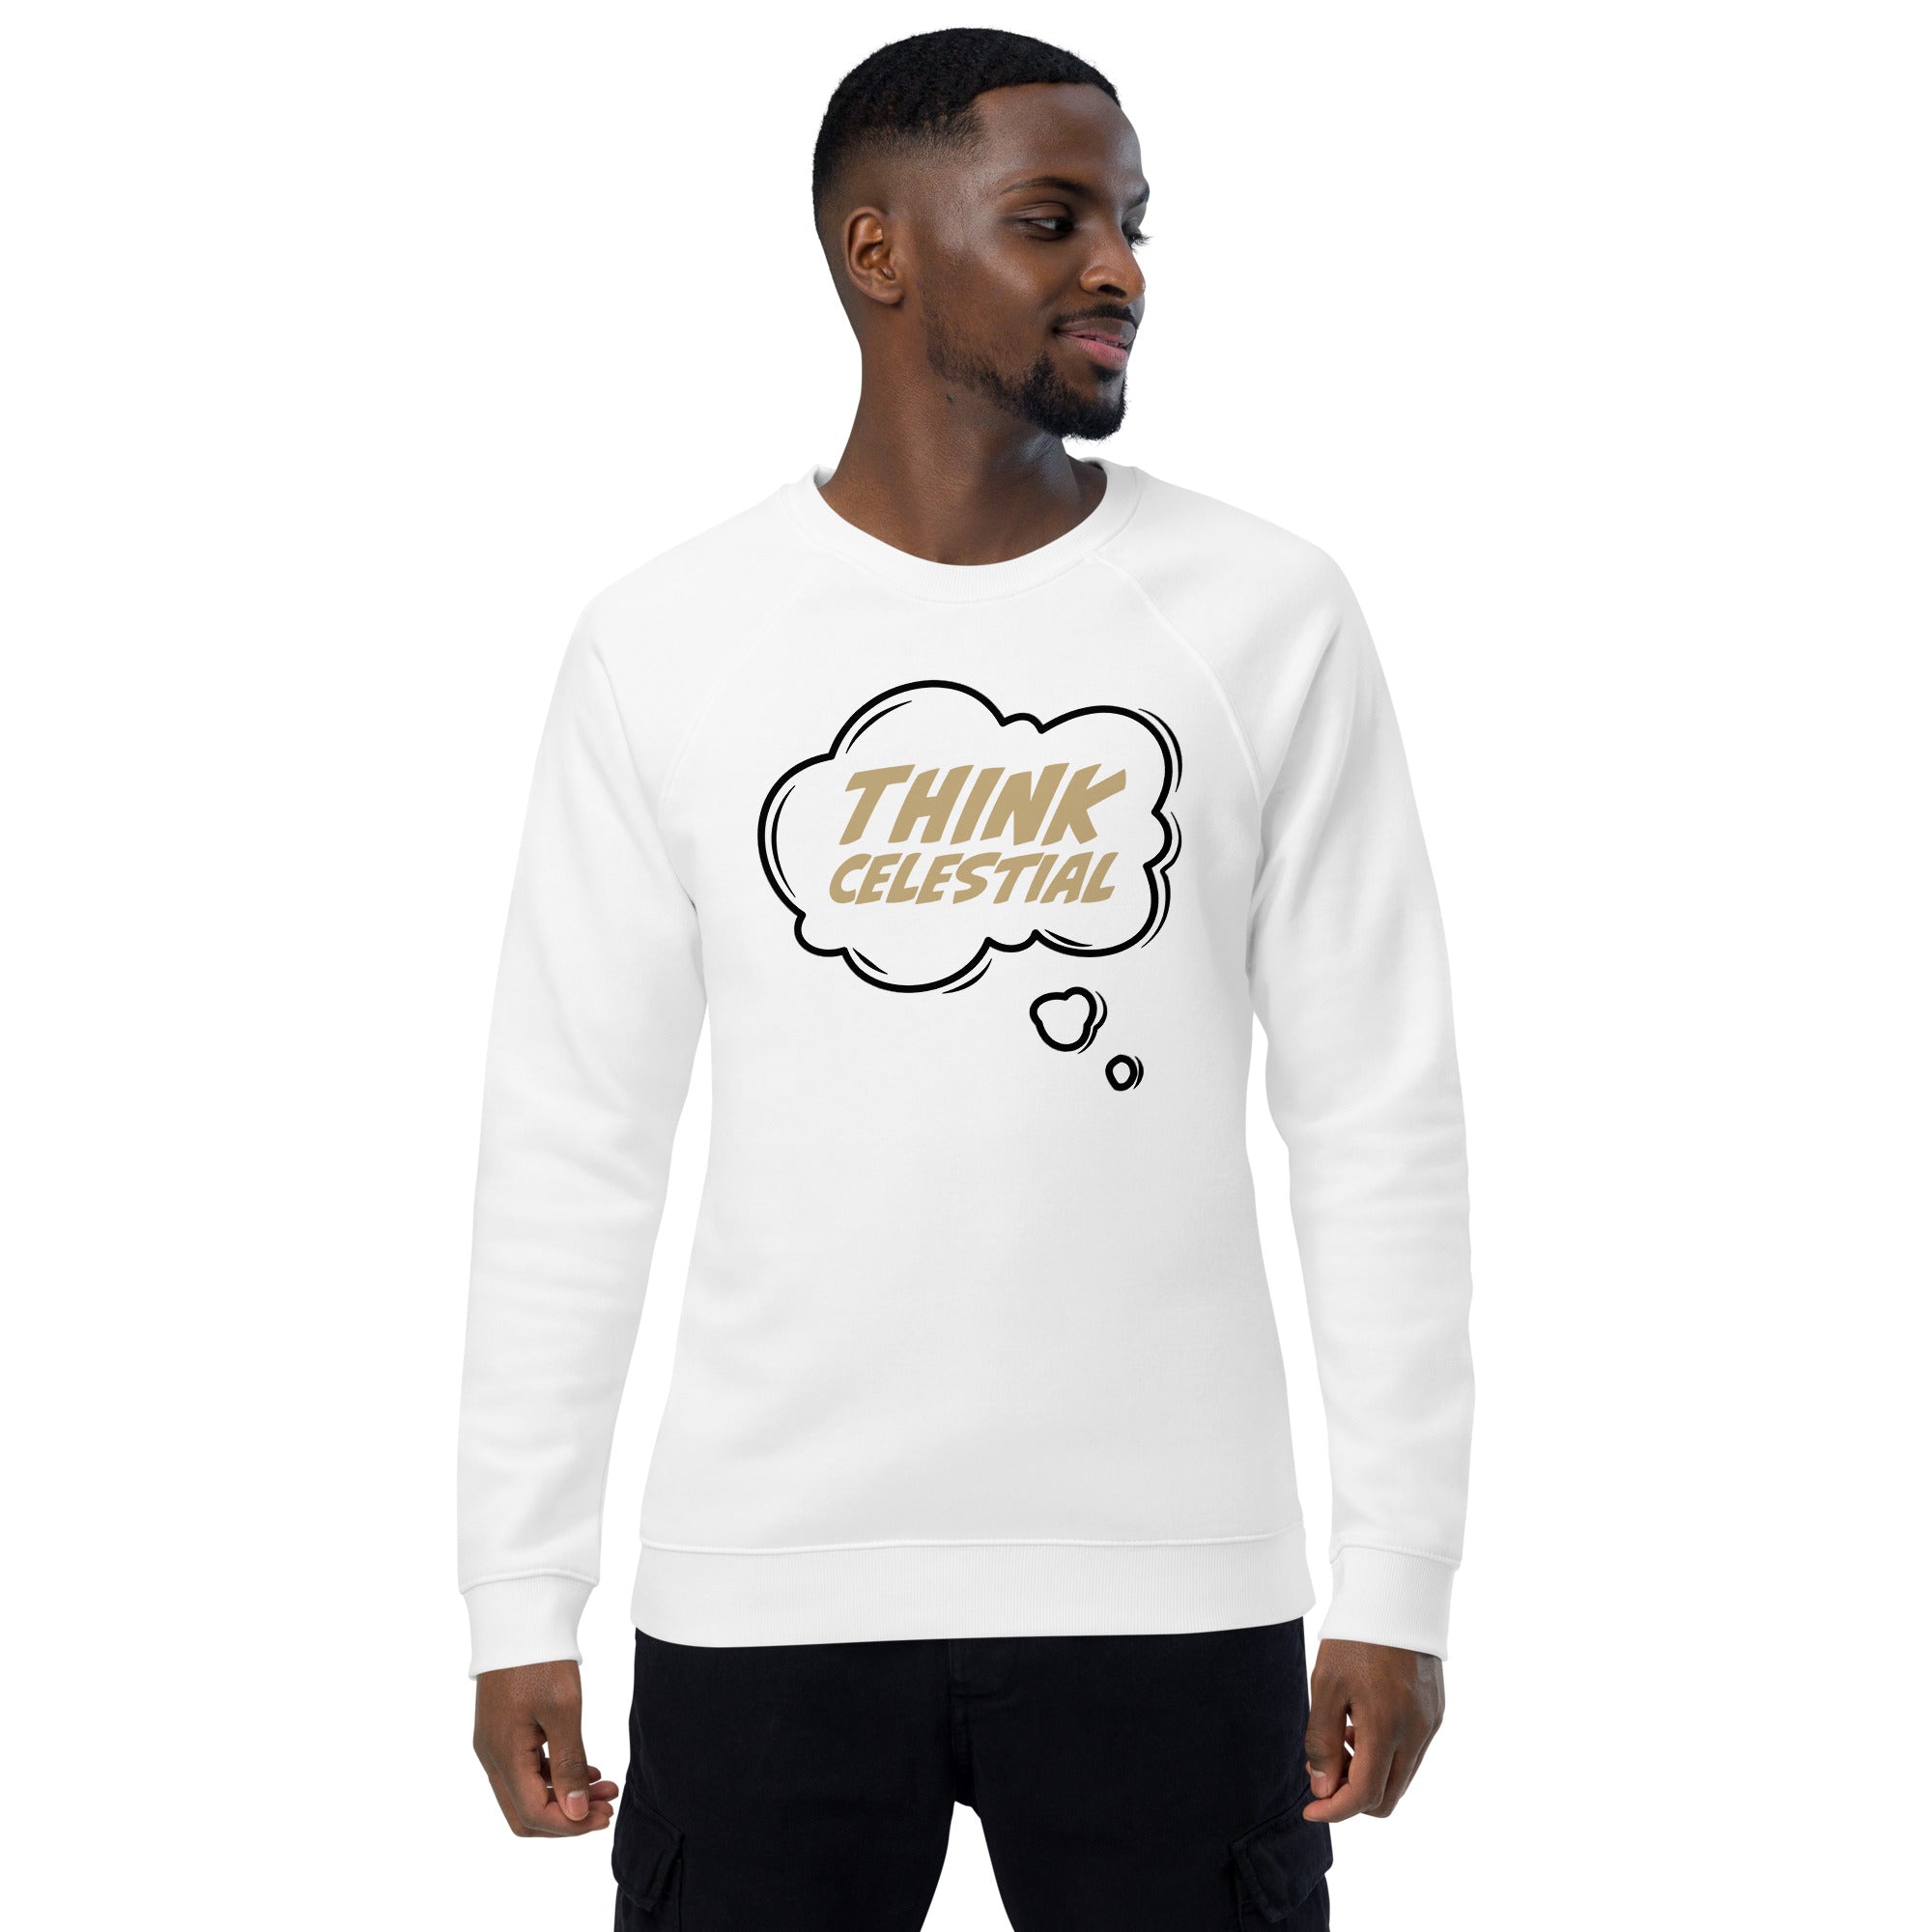 Think Celestial | Unisex organic raglan sweatshirt